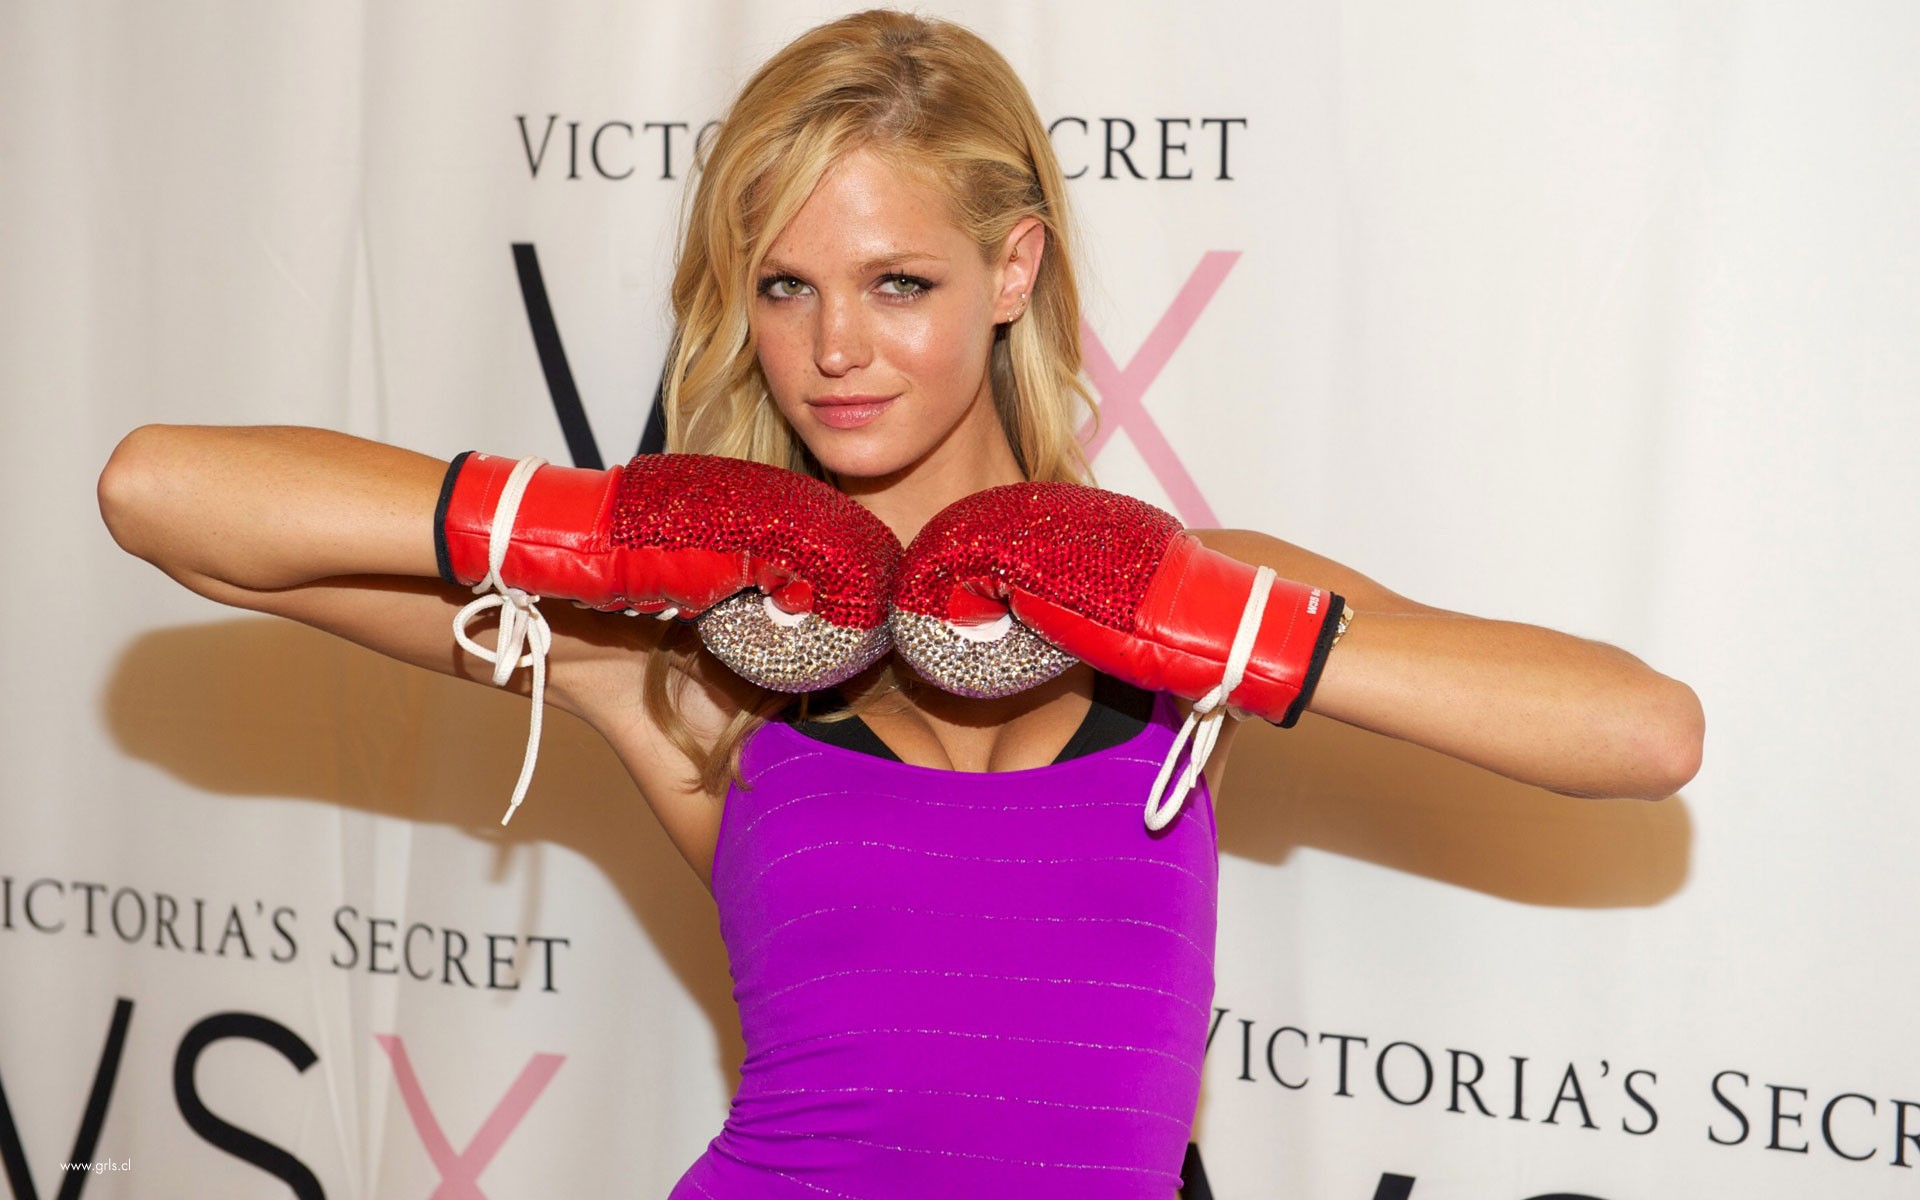 Erin Heatherton & Adriana Lima: 'VSX' Victoria's Secret Launch